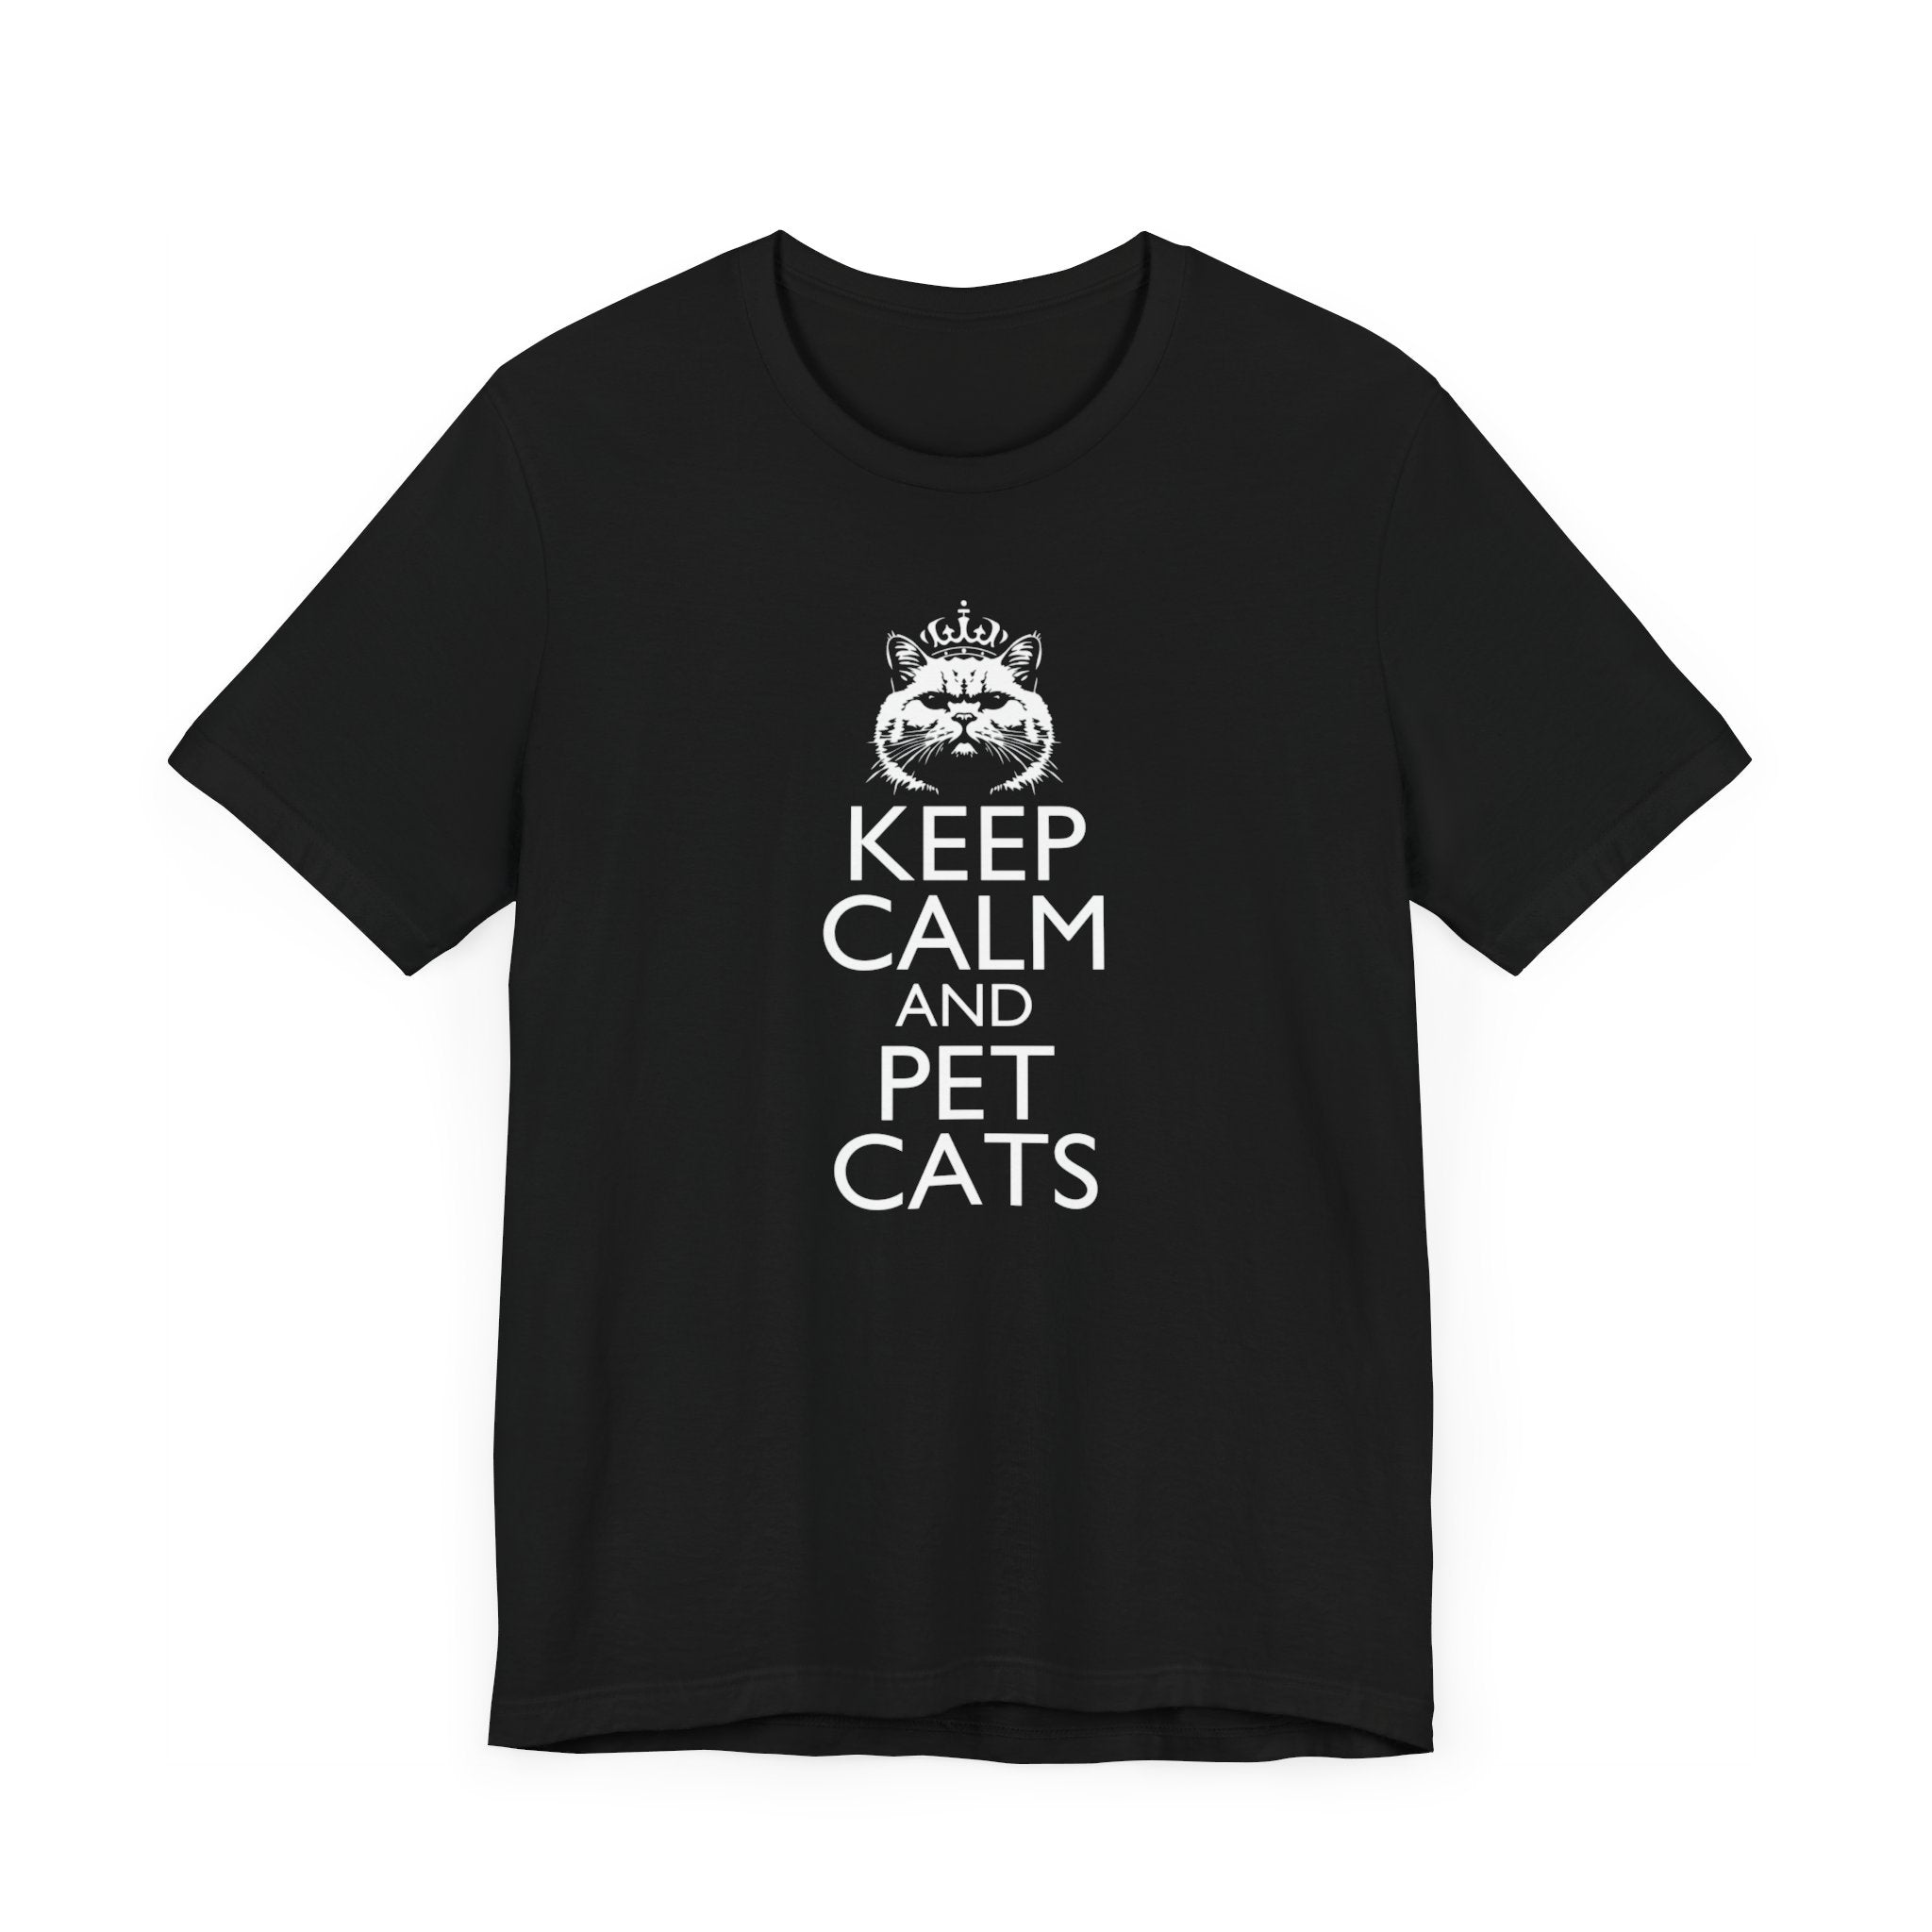 Keep Calm and Pet Cats T-Shirt